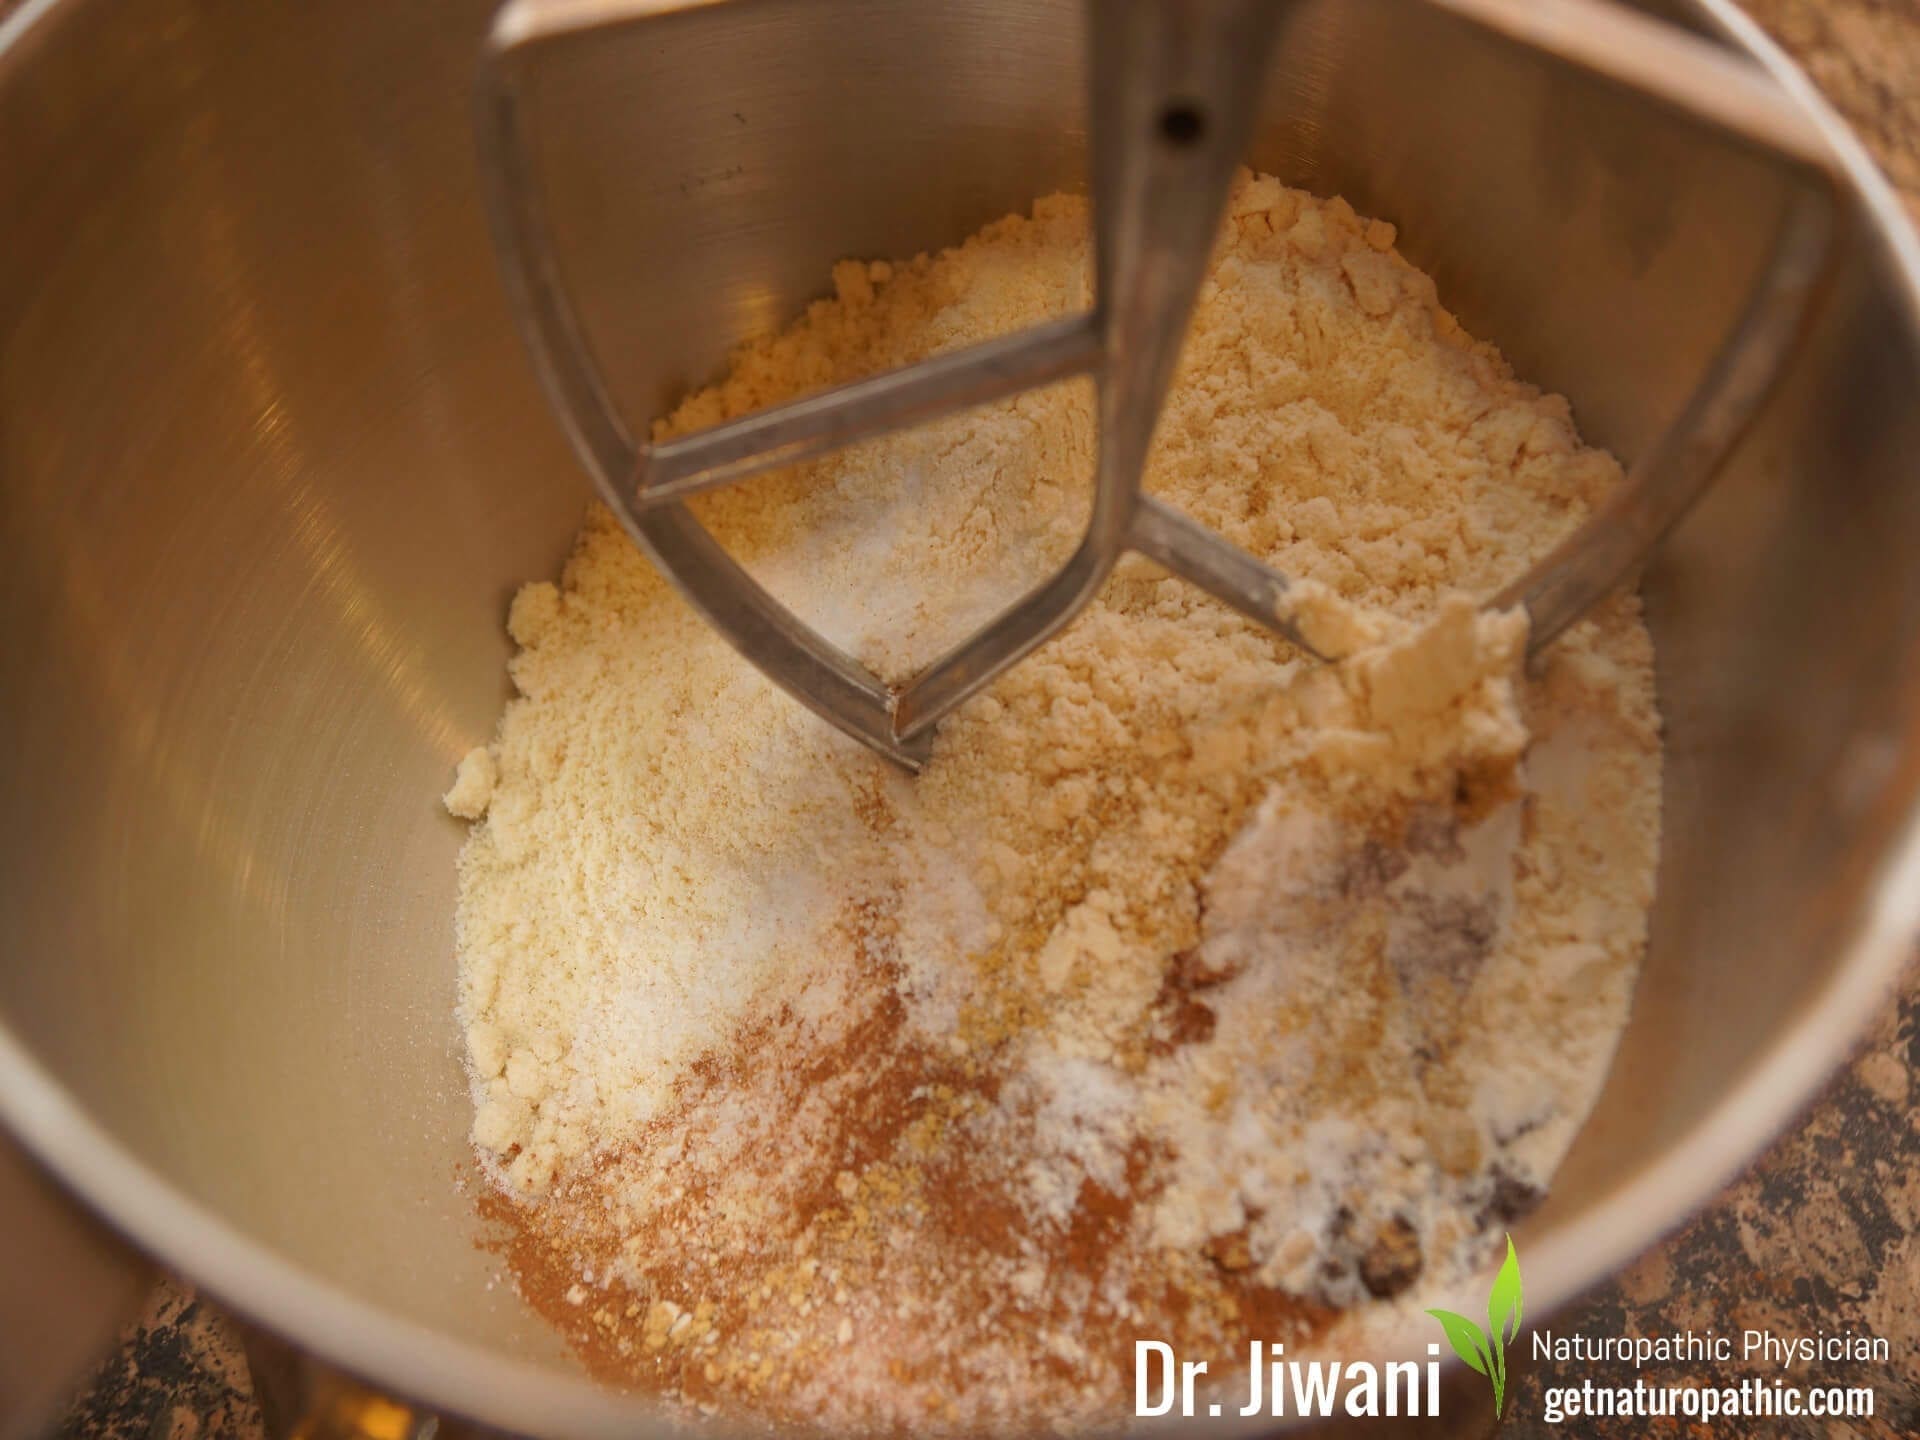 Dr.Jiwani's Paleo Vegan Grain-Free Gingerbread Cookies Recipe: Gluten-Free, Egg-Free, Dairy-Free, Soy-Free, Sugar-Free, Corn-Free, Ideal For Diabetic, Paleo, Keto, Vegan & Candida Diets | Dr. Jiwani's Naturopathic Nuggets Blog